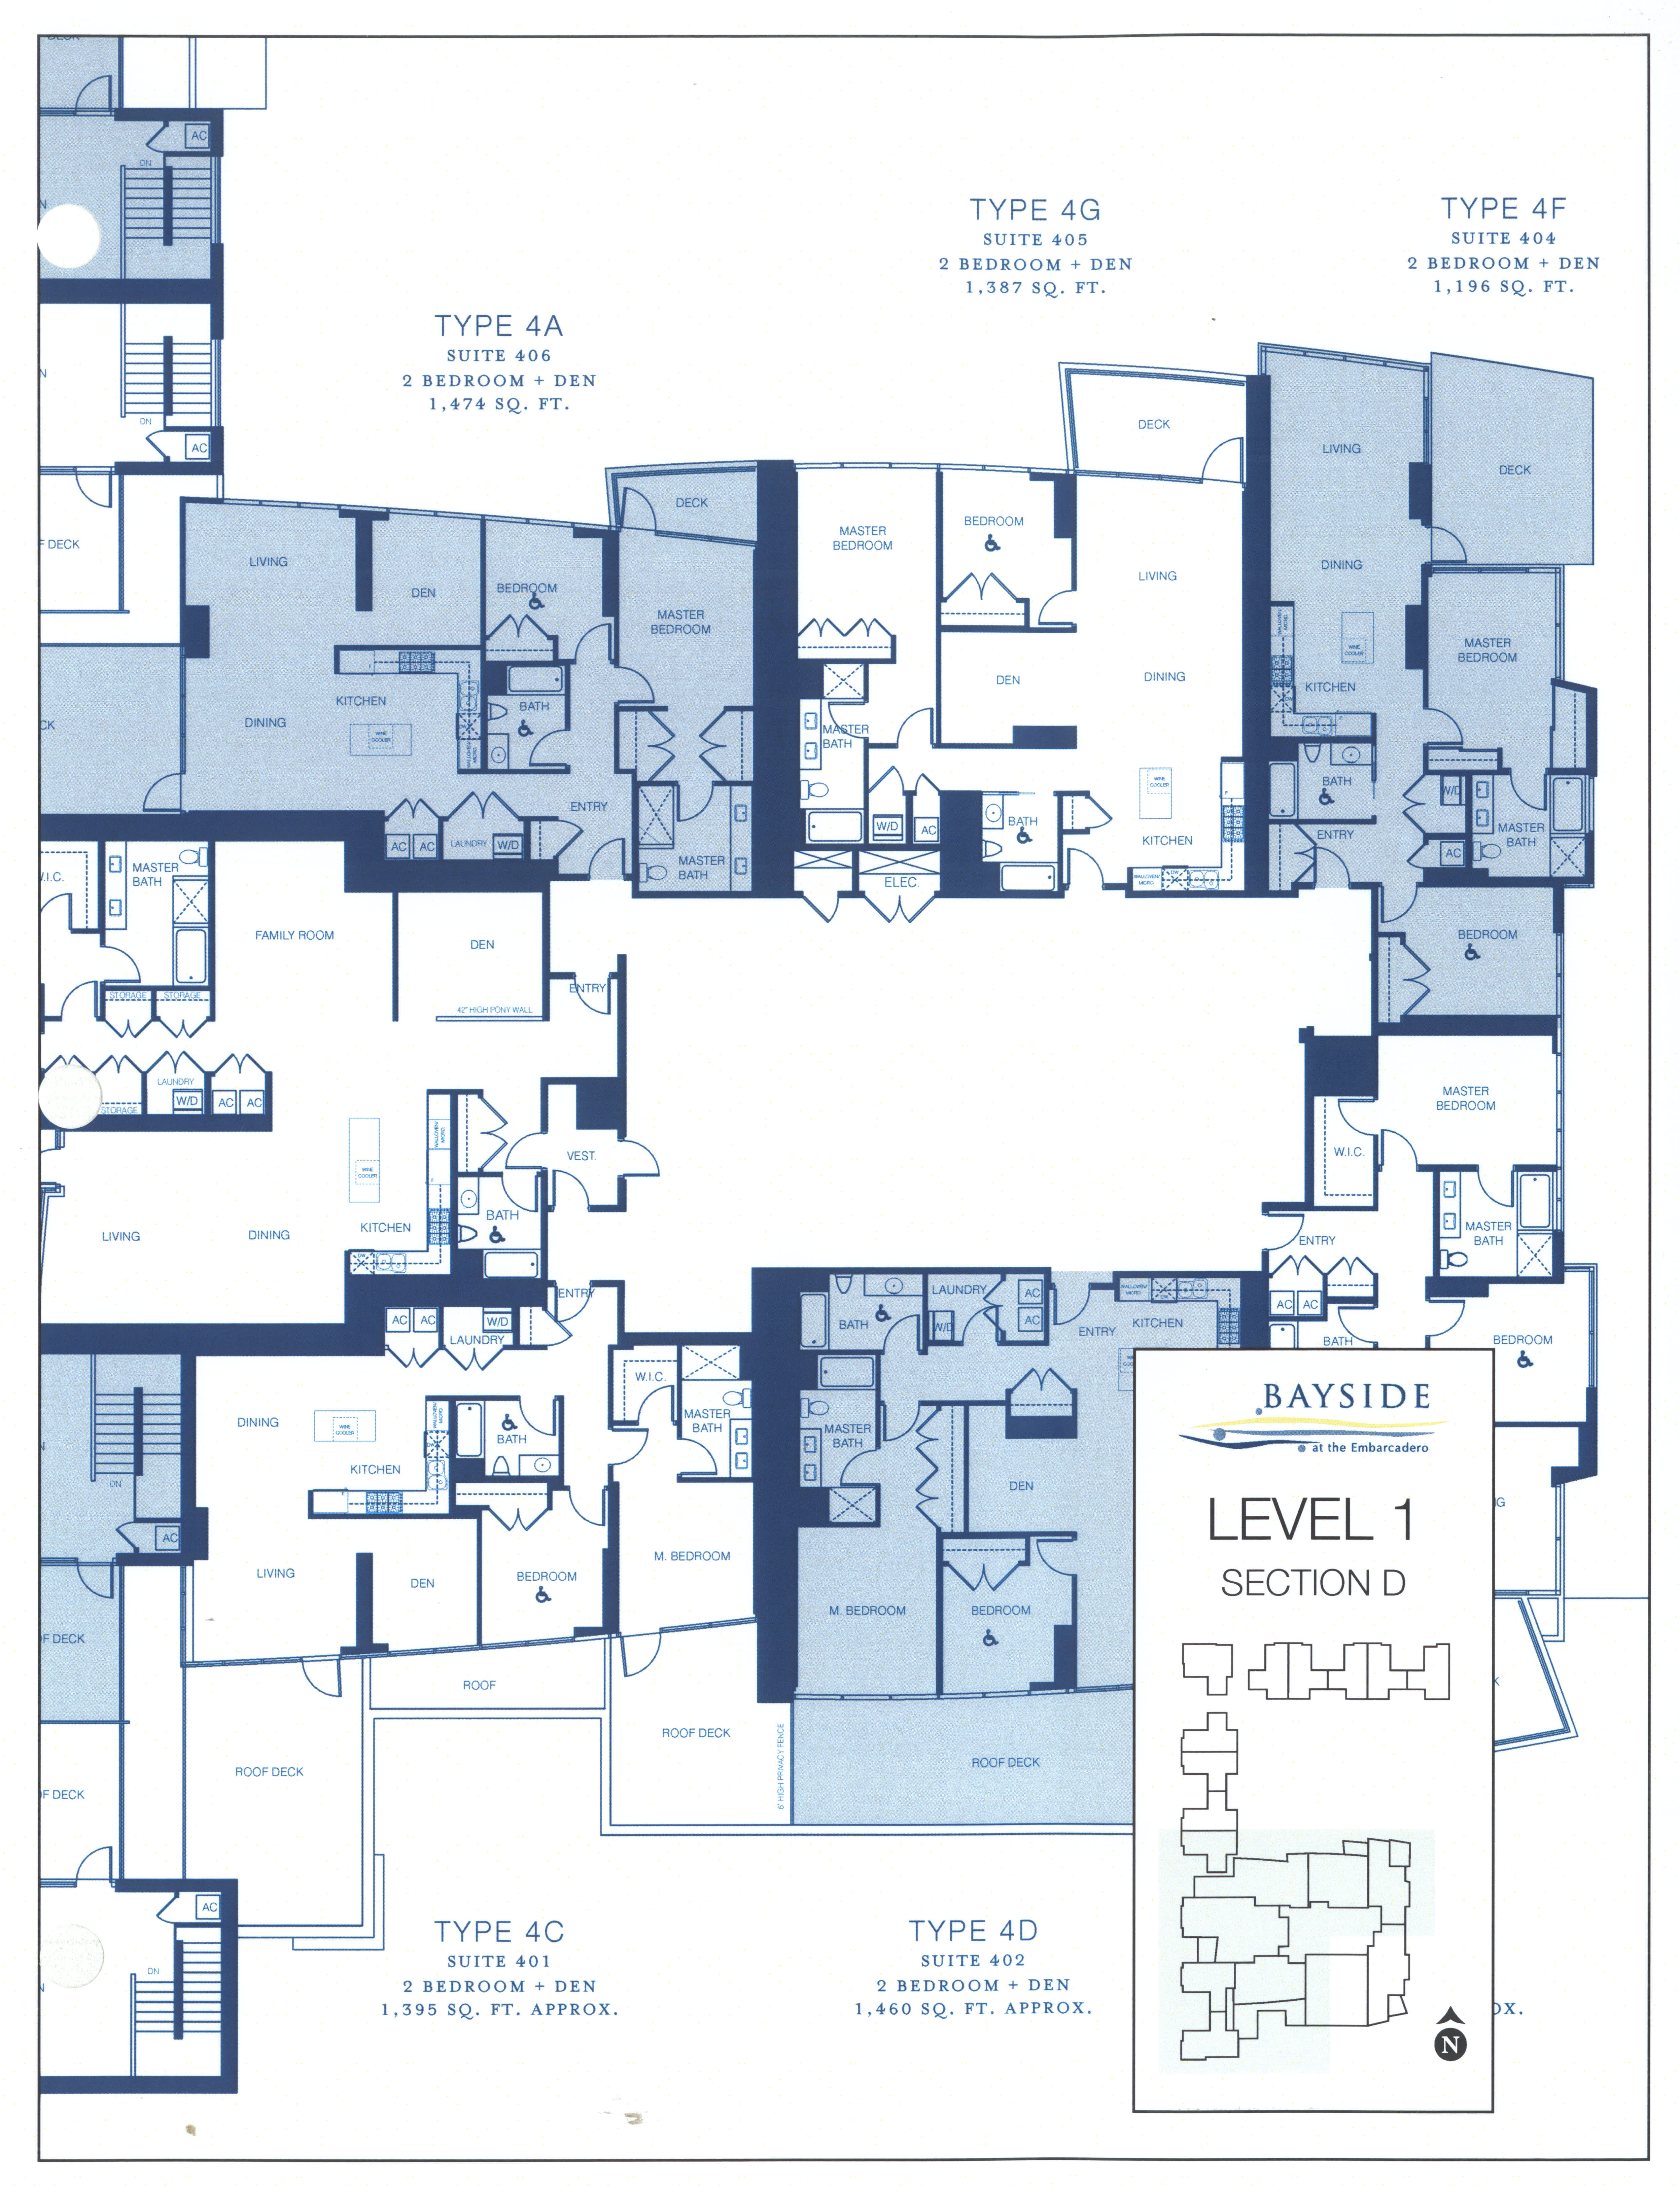 Bayside Floor Plan Level 1 Section D